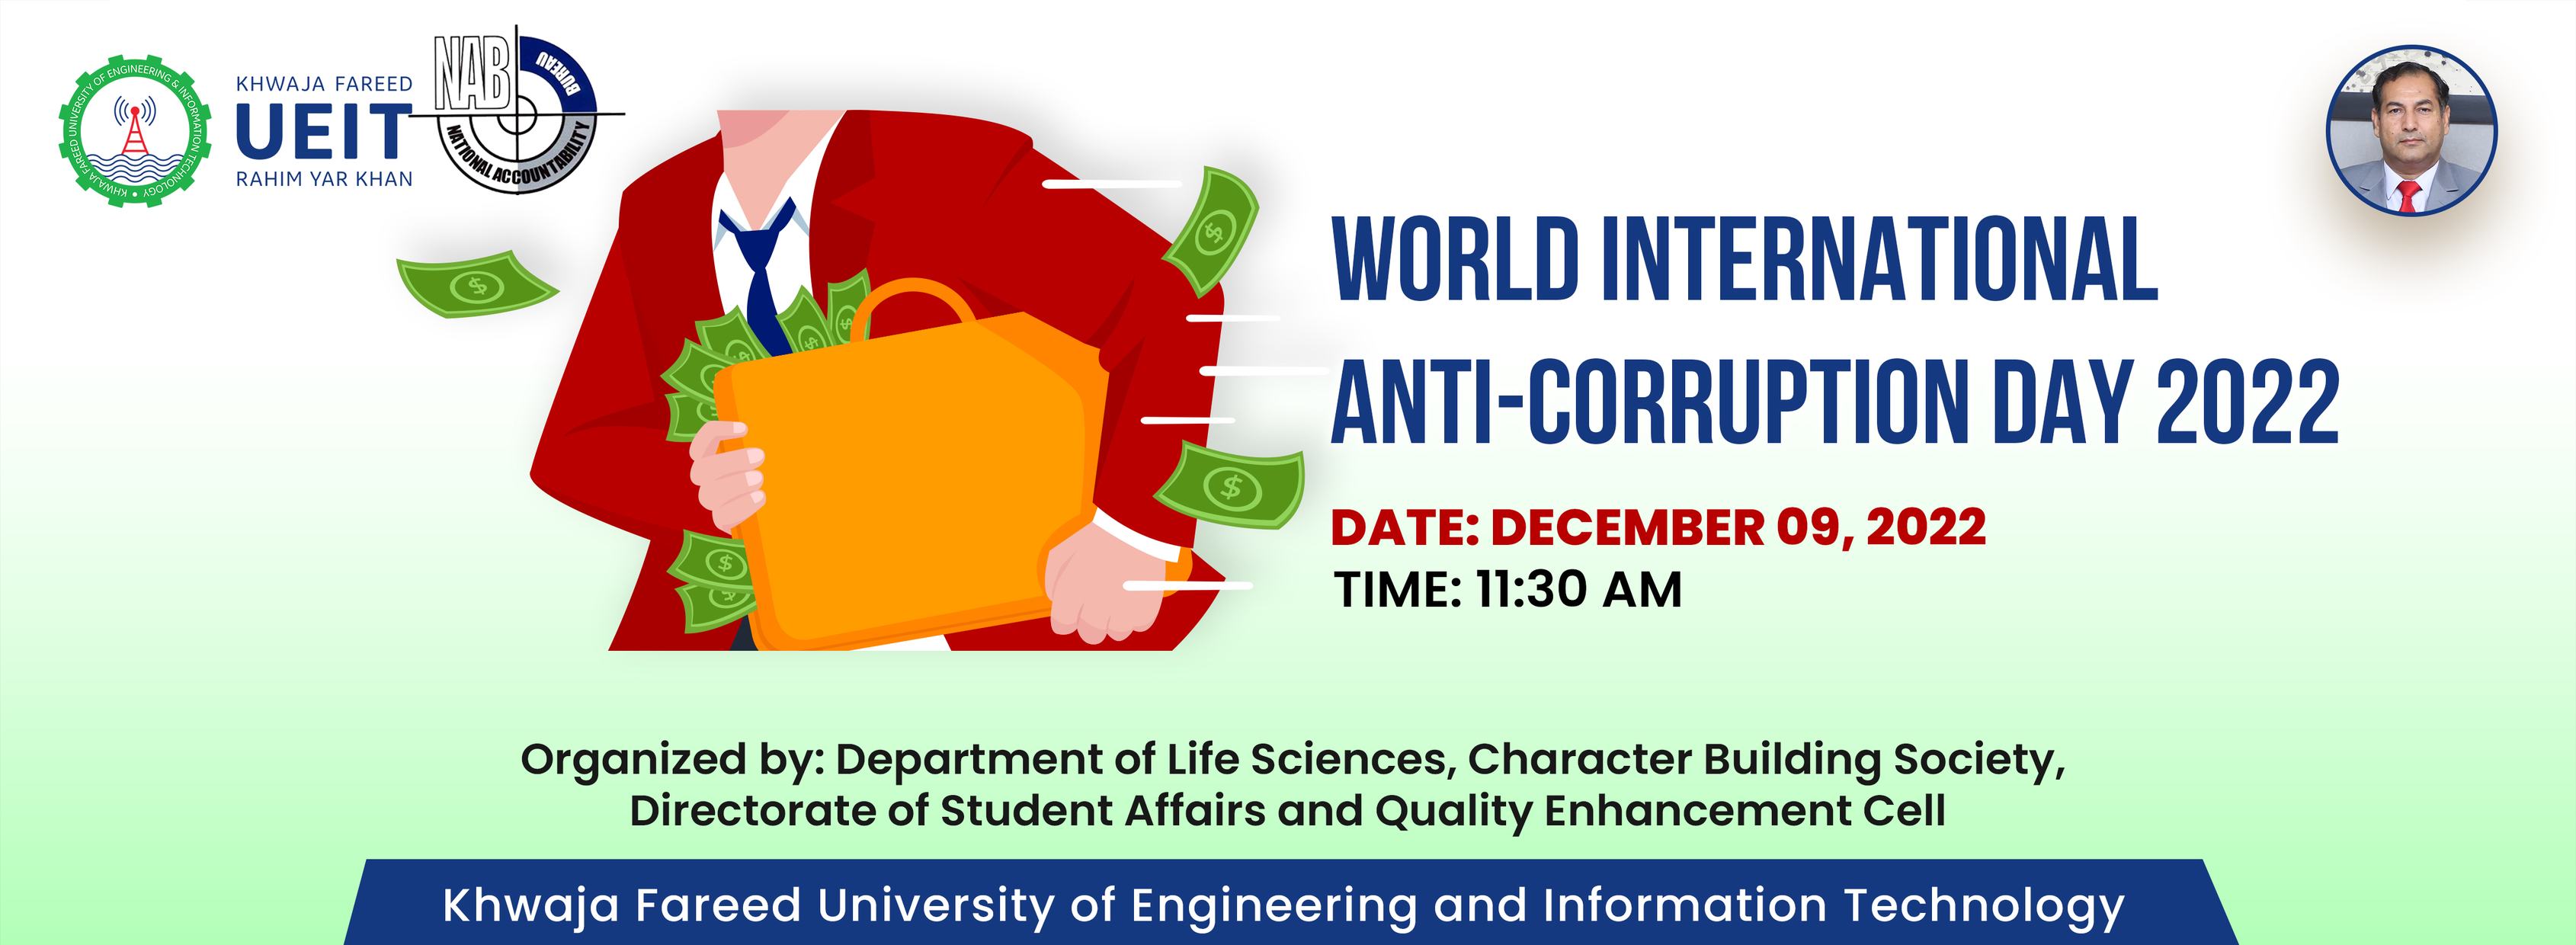 Awareness Walk on World International Anti-Corruption Day